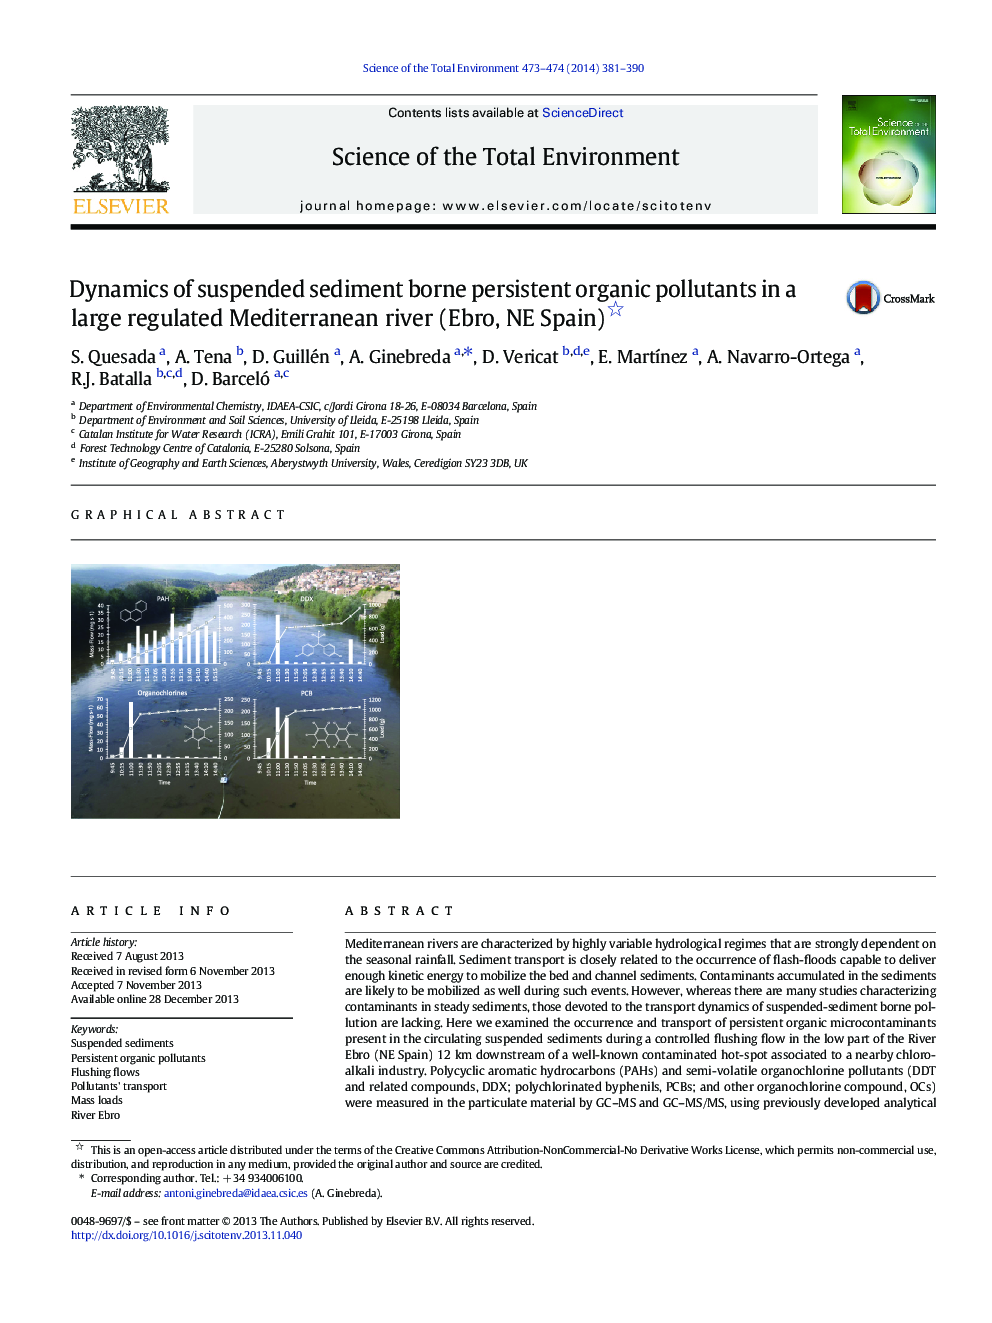 Dynamics of suspended sediment borne persistent organic pollutants in a large regulated Mediterranean river (Ebro, NE Spain)